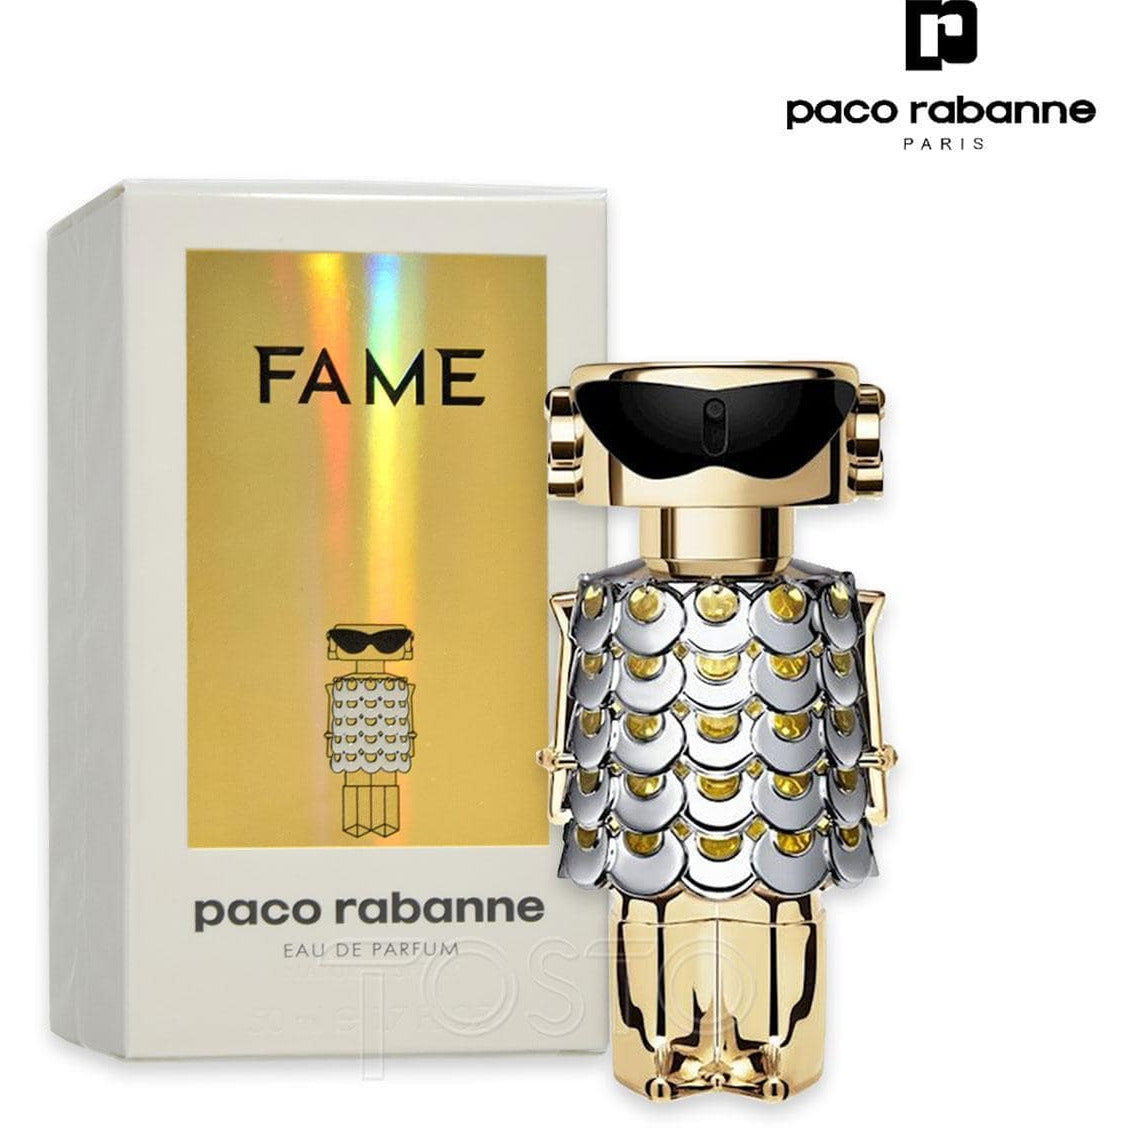 paco-rabanne-feme-perfume-chile